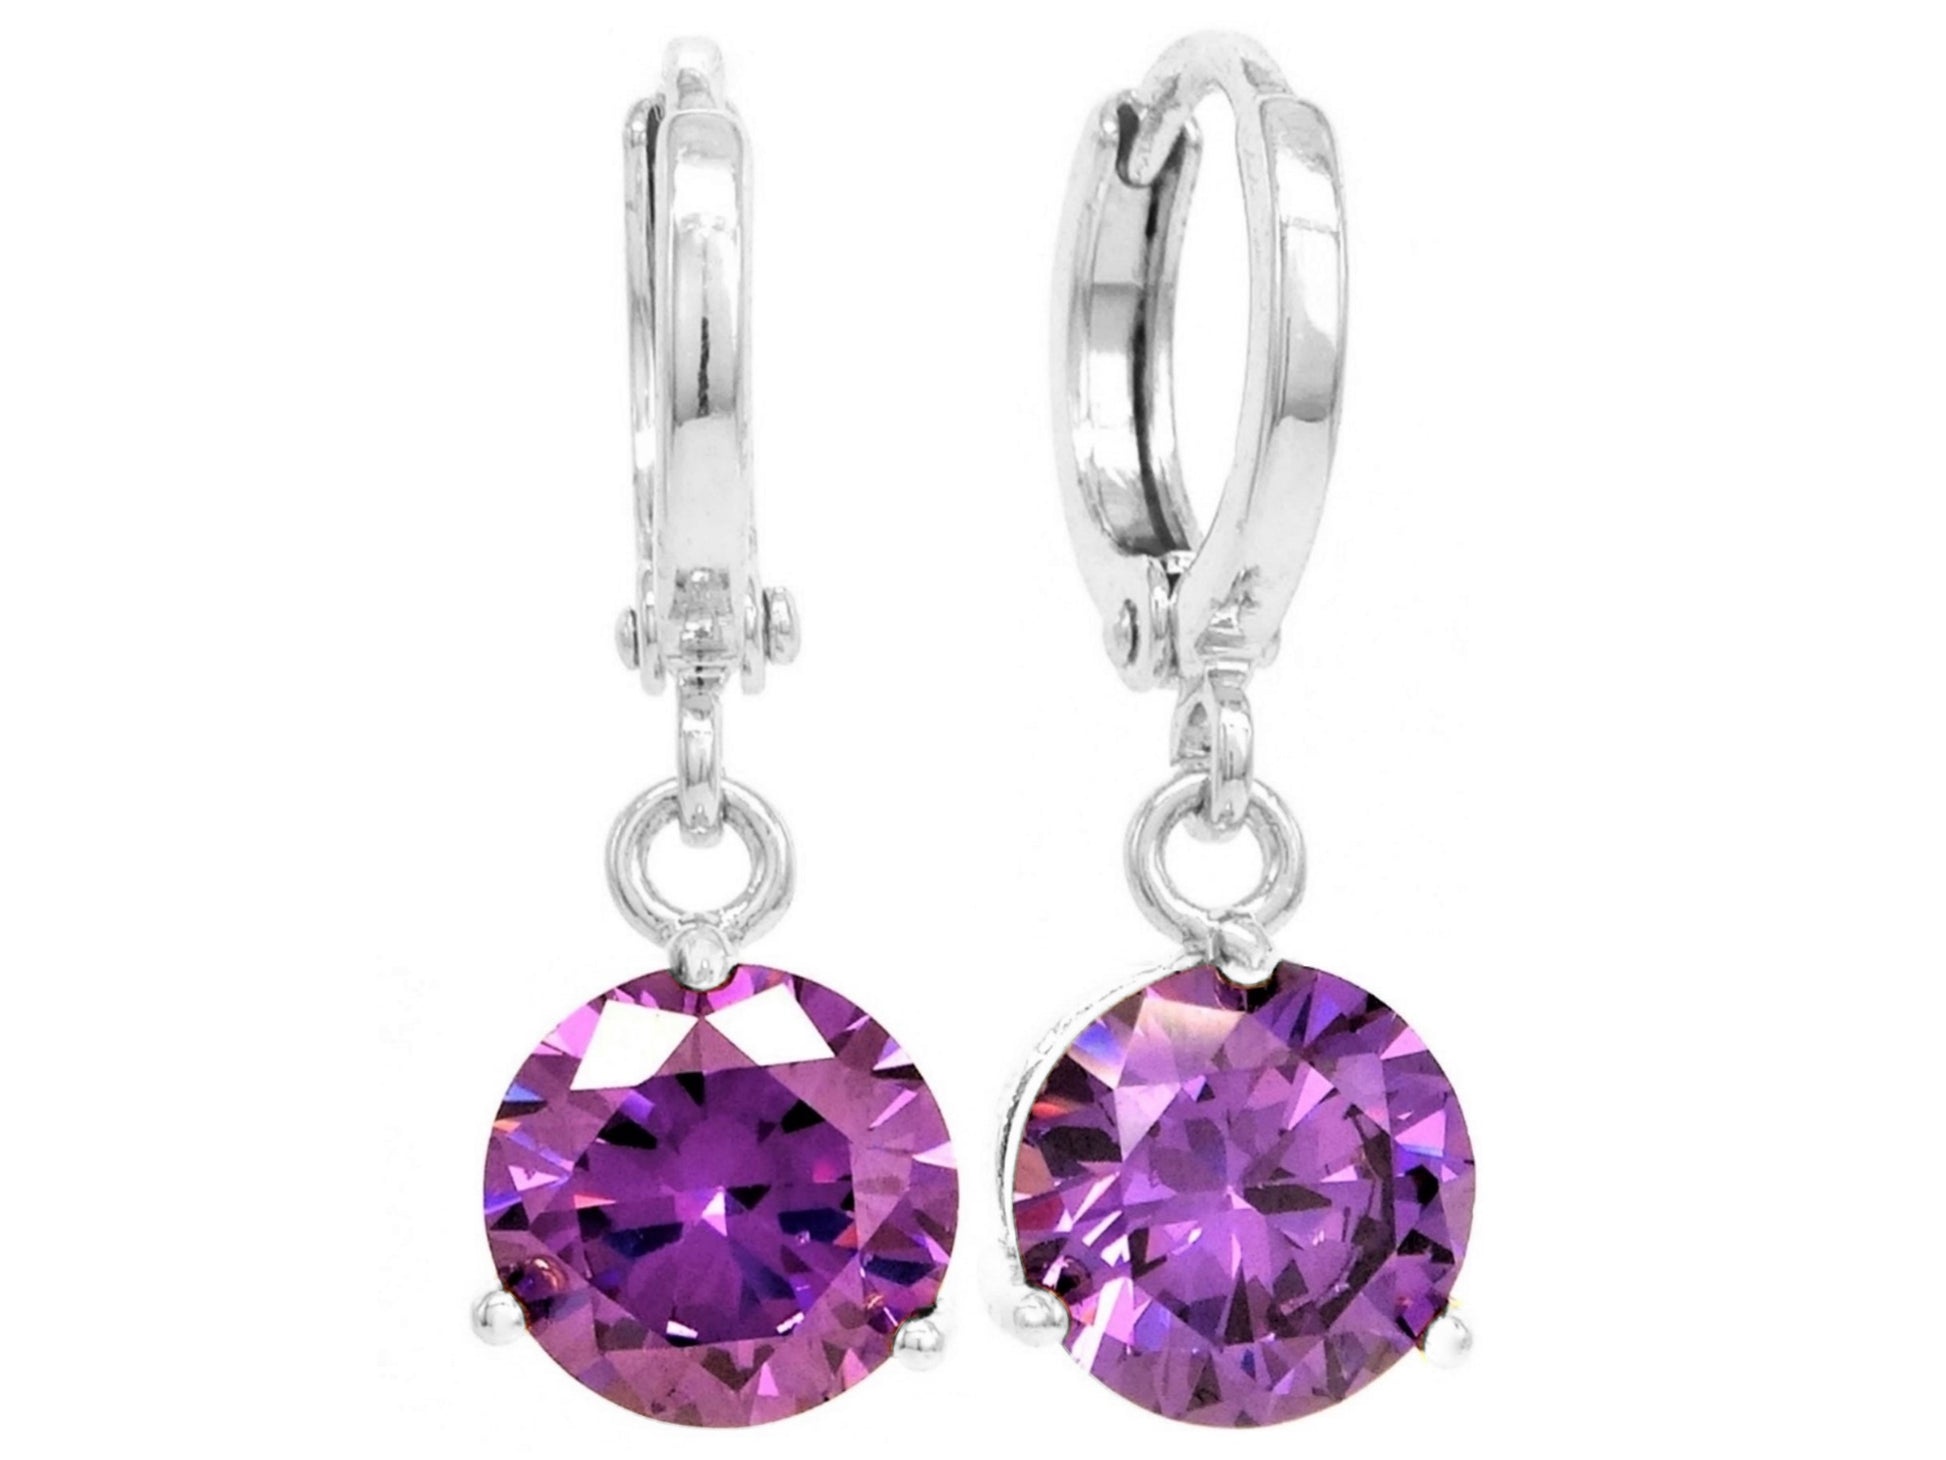 Purple gem white gold earrings MAIN